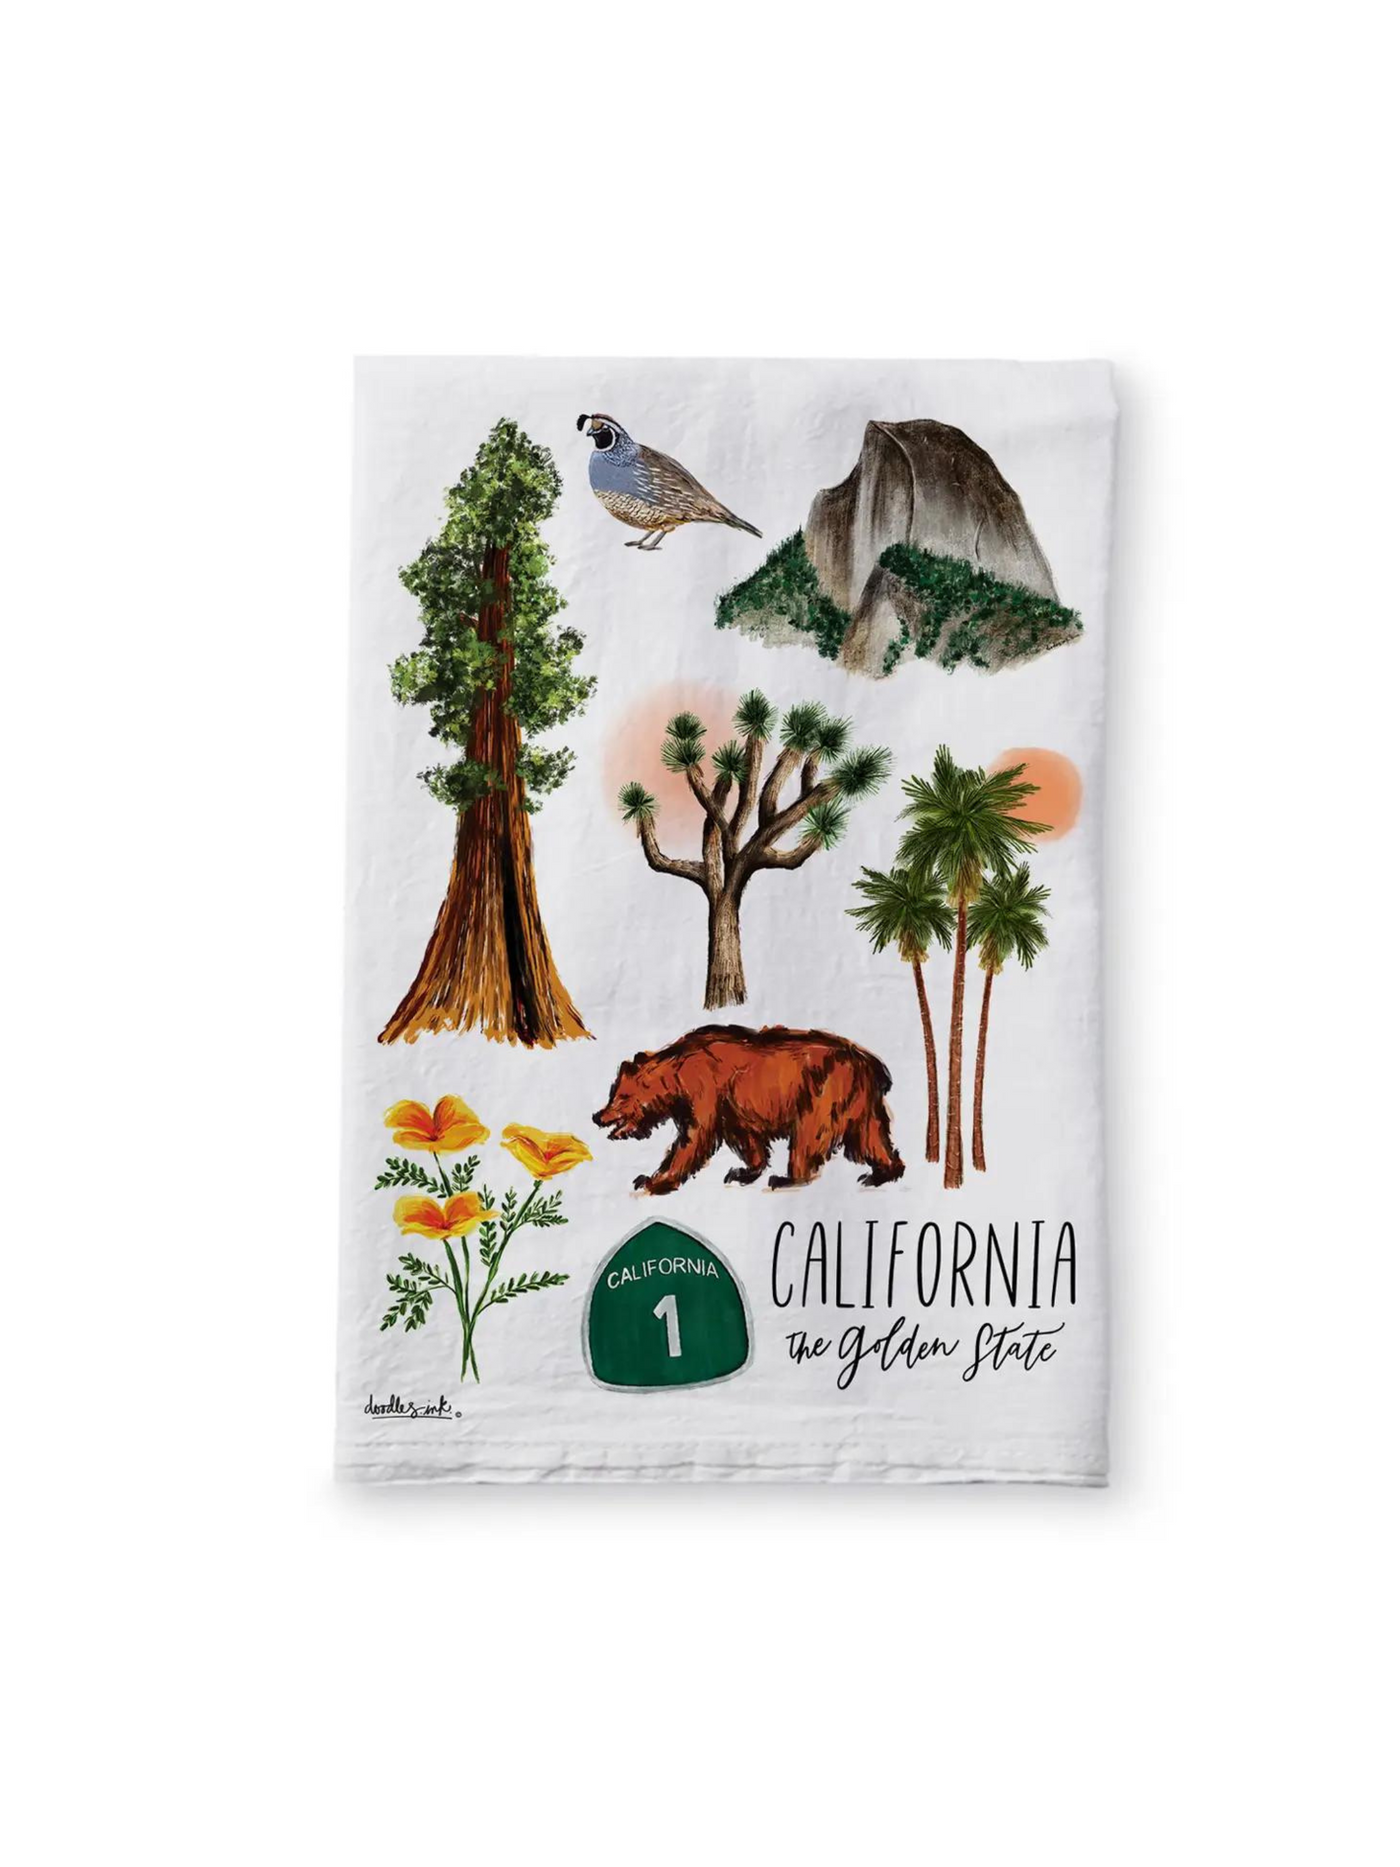 California Love Tea Towel